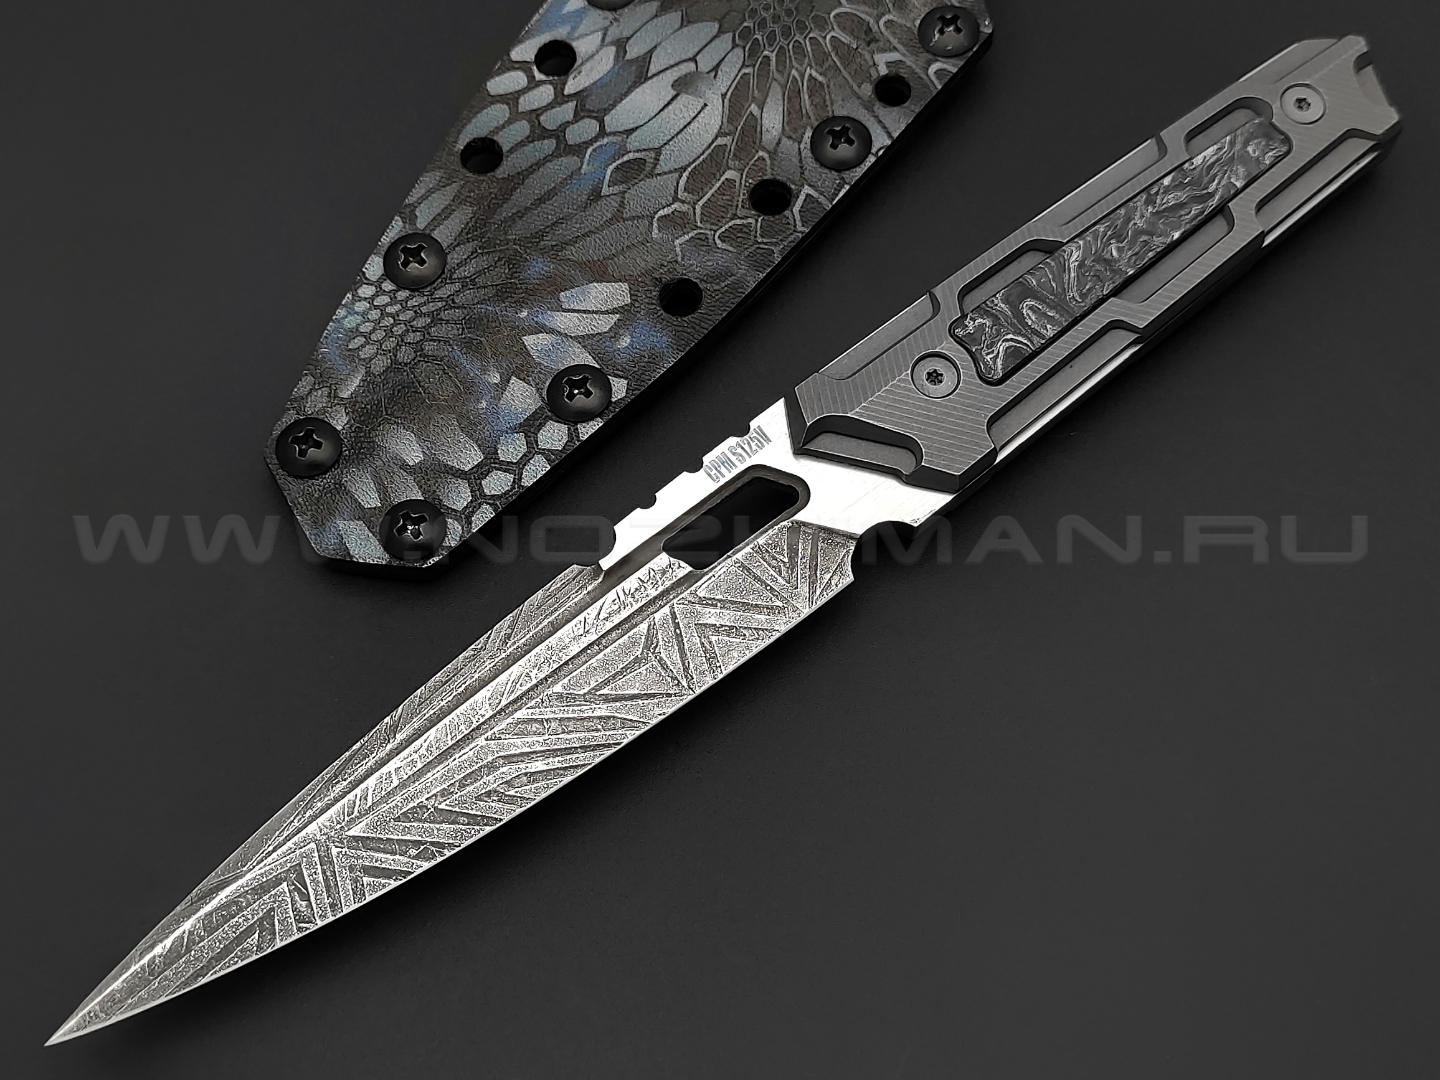 Neyris Knives нож Синтет сталь CPM S125V, рукоять титан, carbon fiber dark matter silver